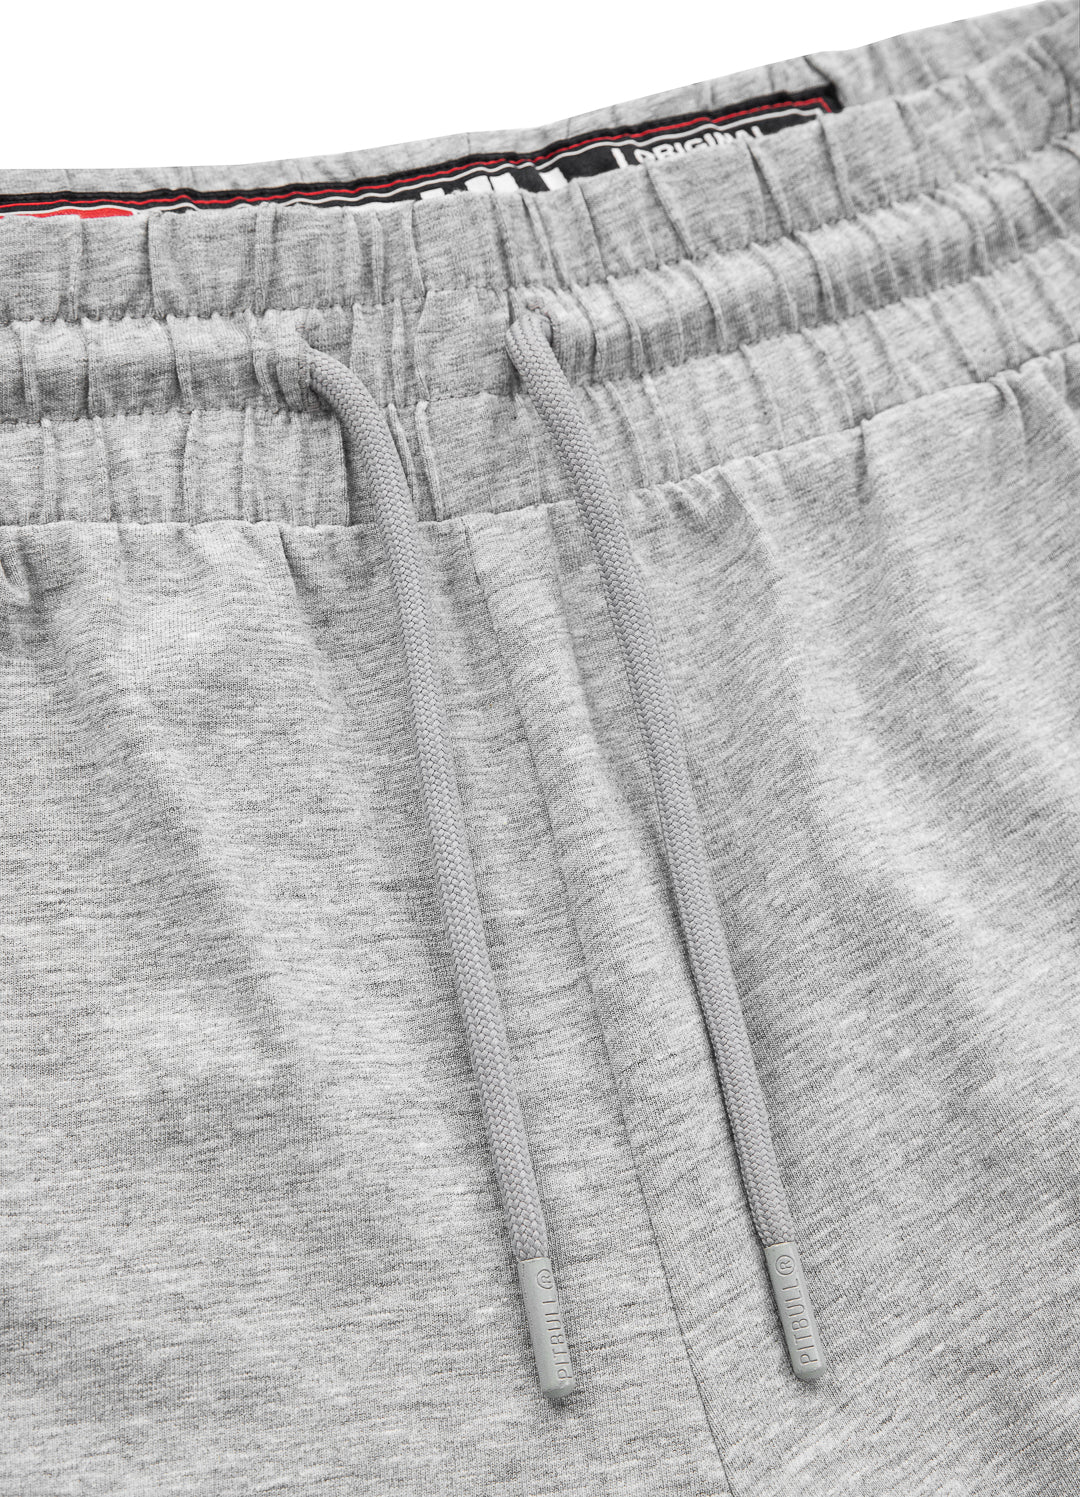 DURANGO Spandex Grey Shorts.